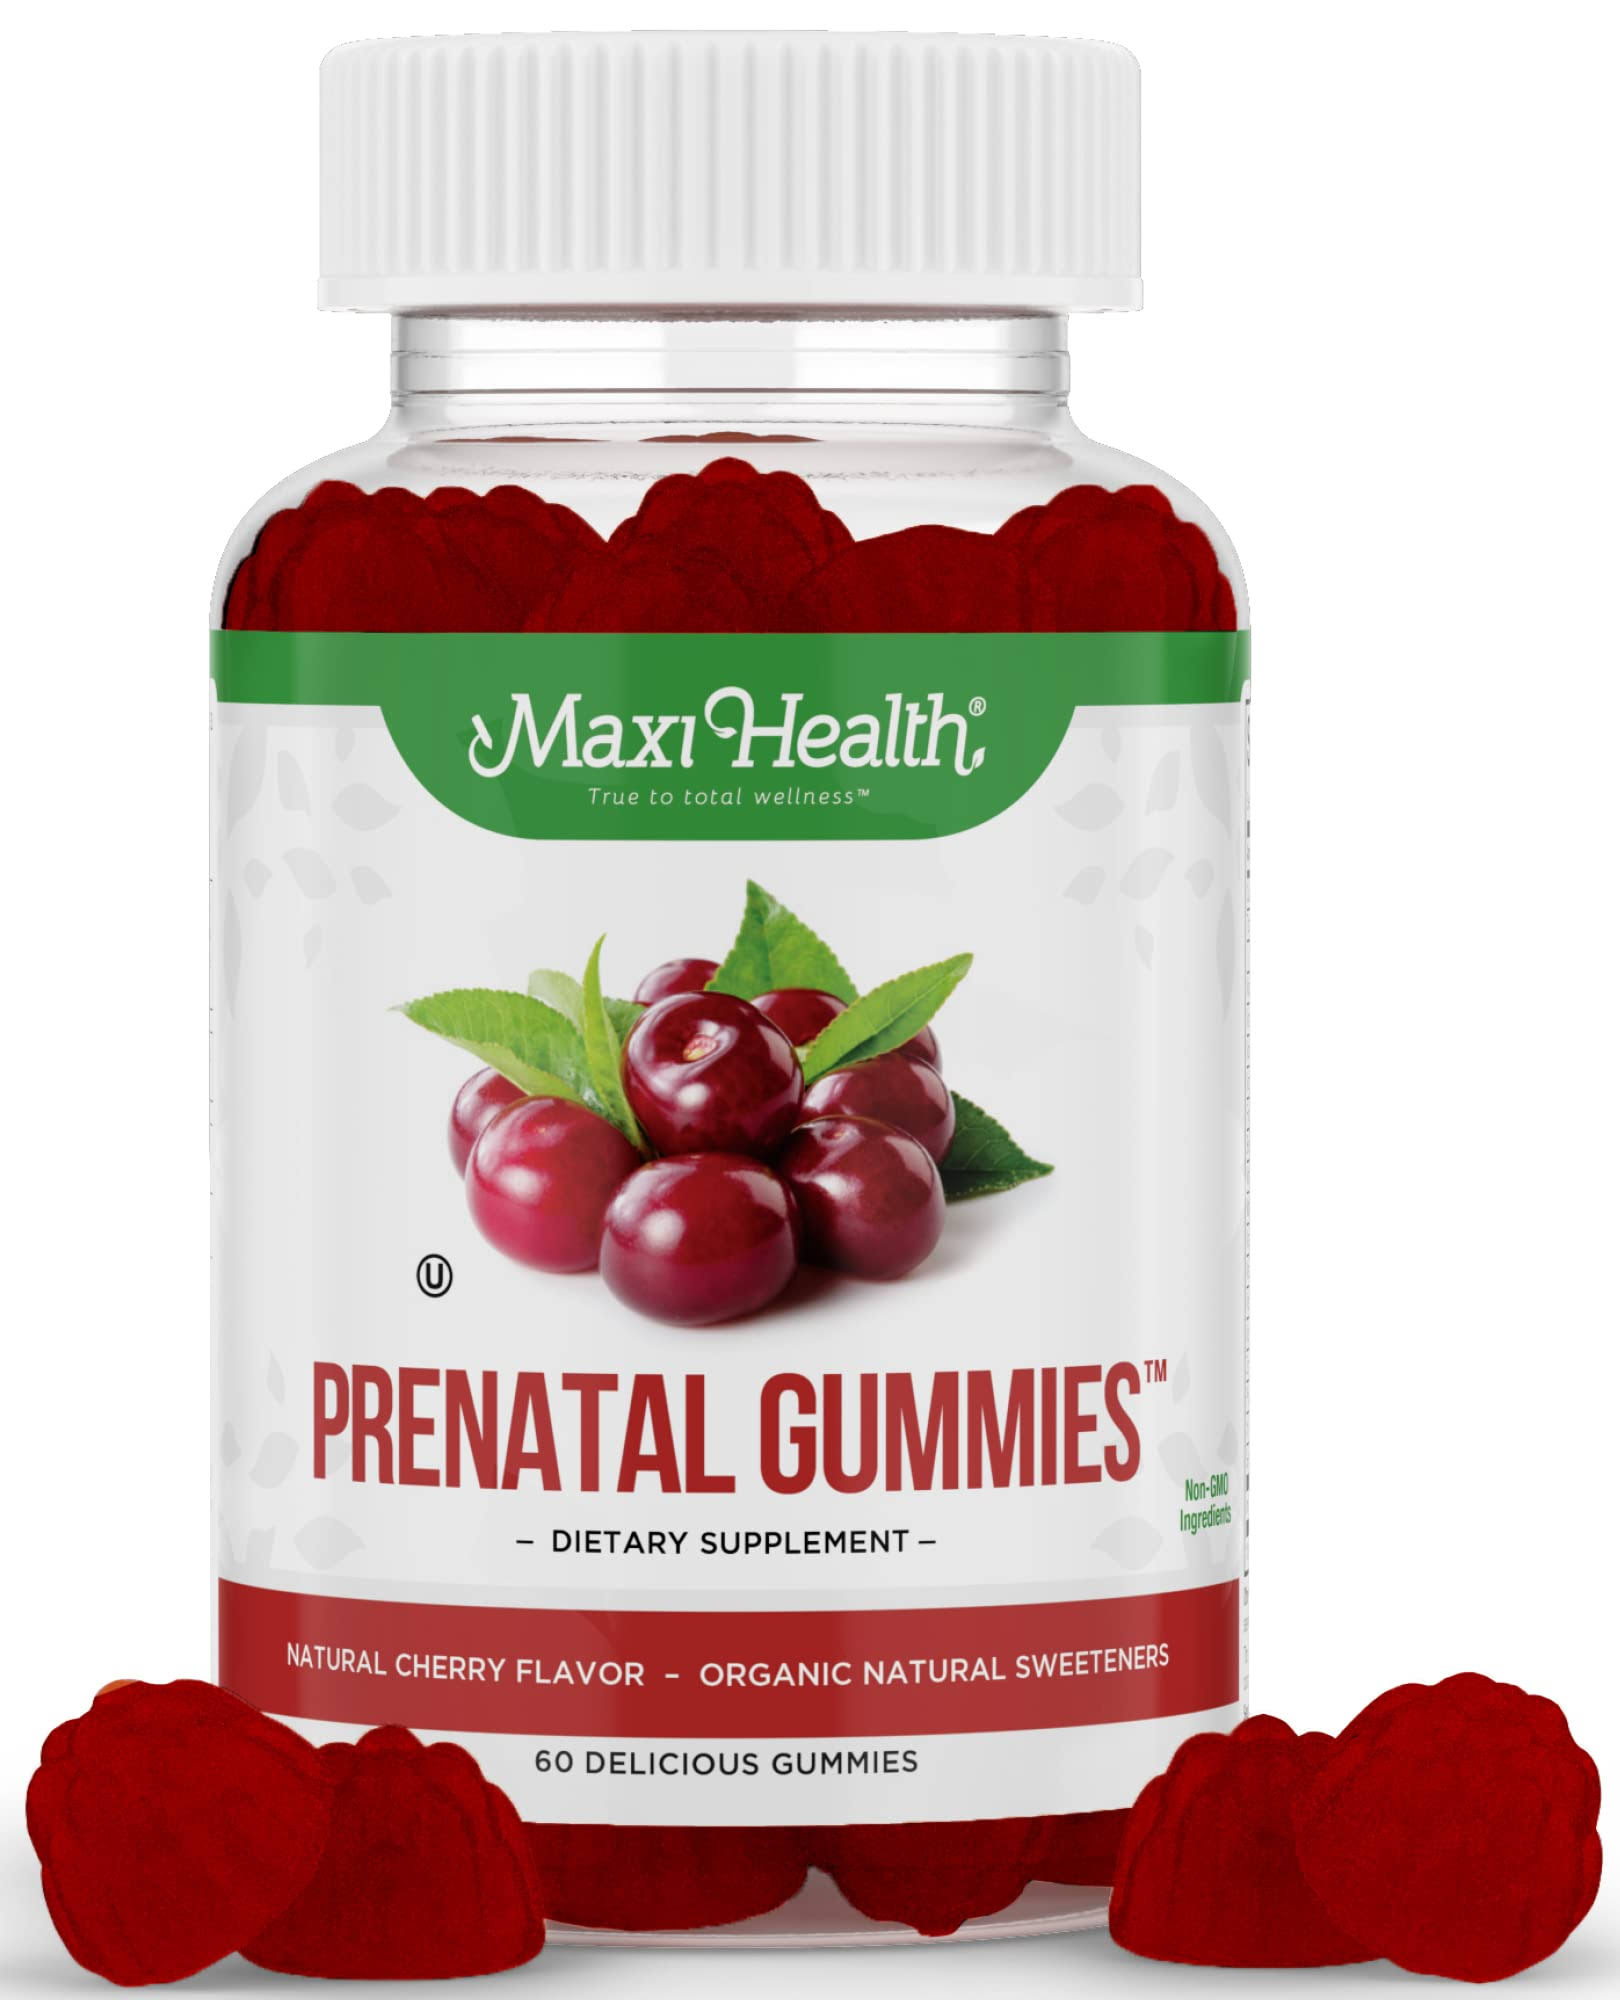 Maxi-Health Prenatal Gummy Vitamins for Women (60-Count) Natural, Cher